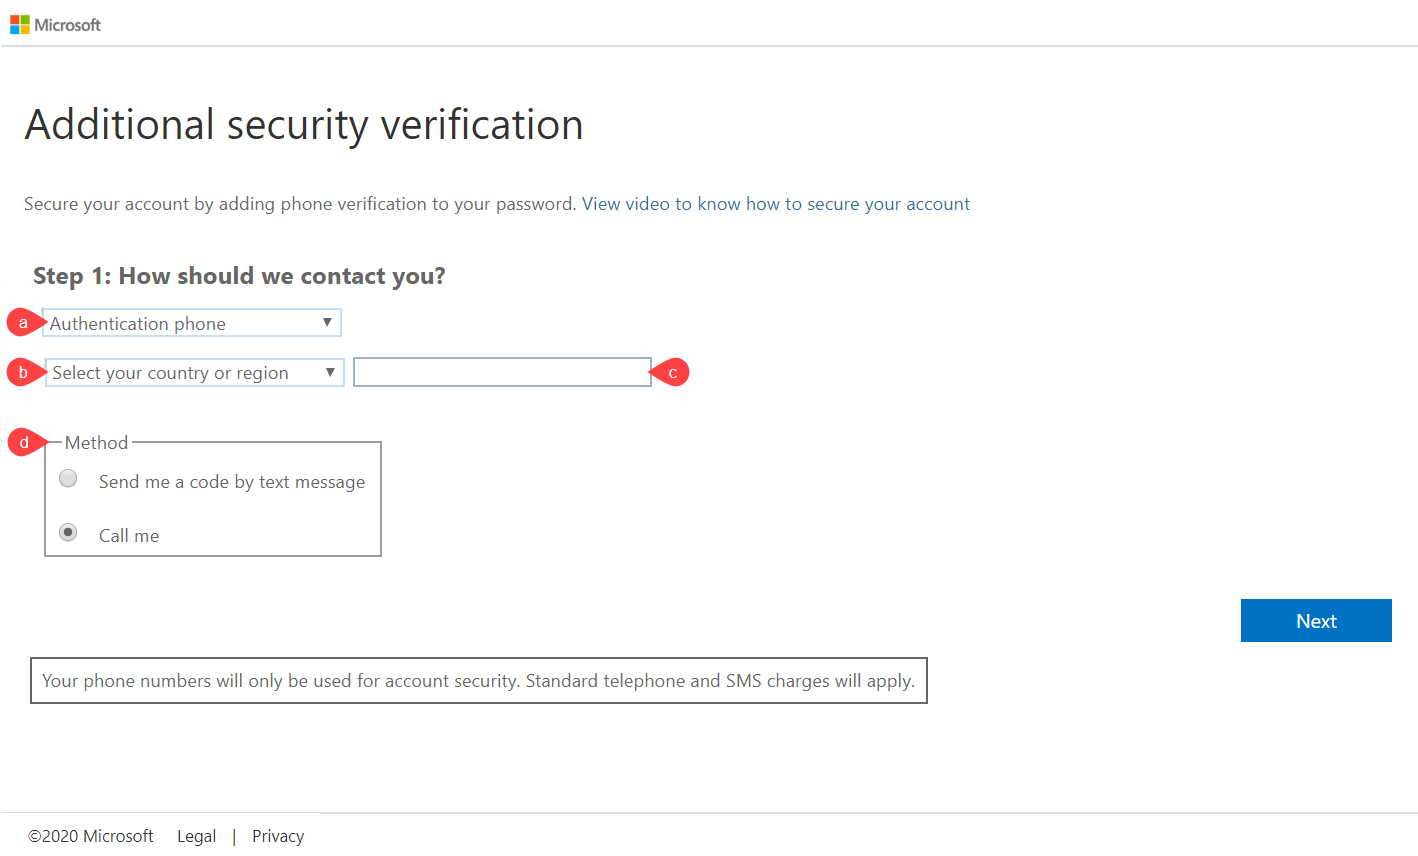 Microsoft Additional security verification dialog box.